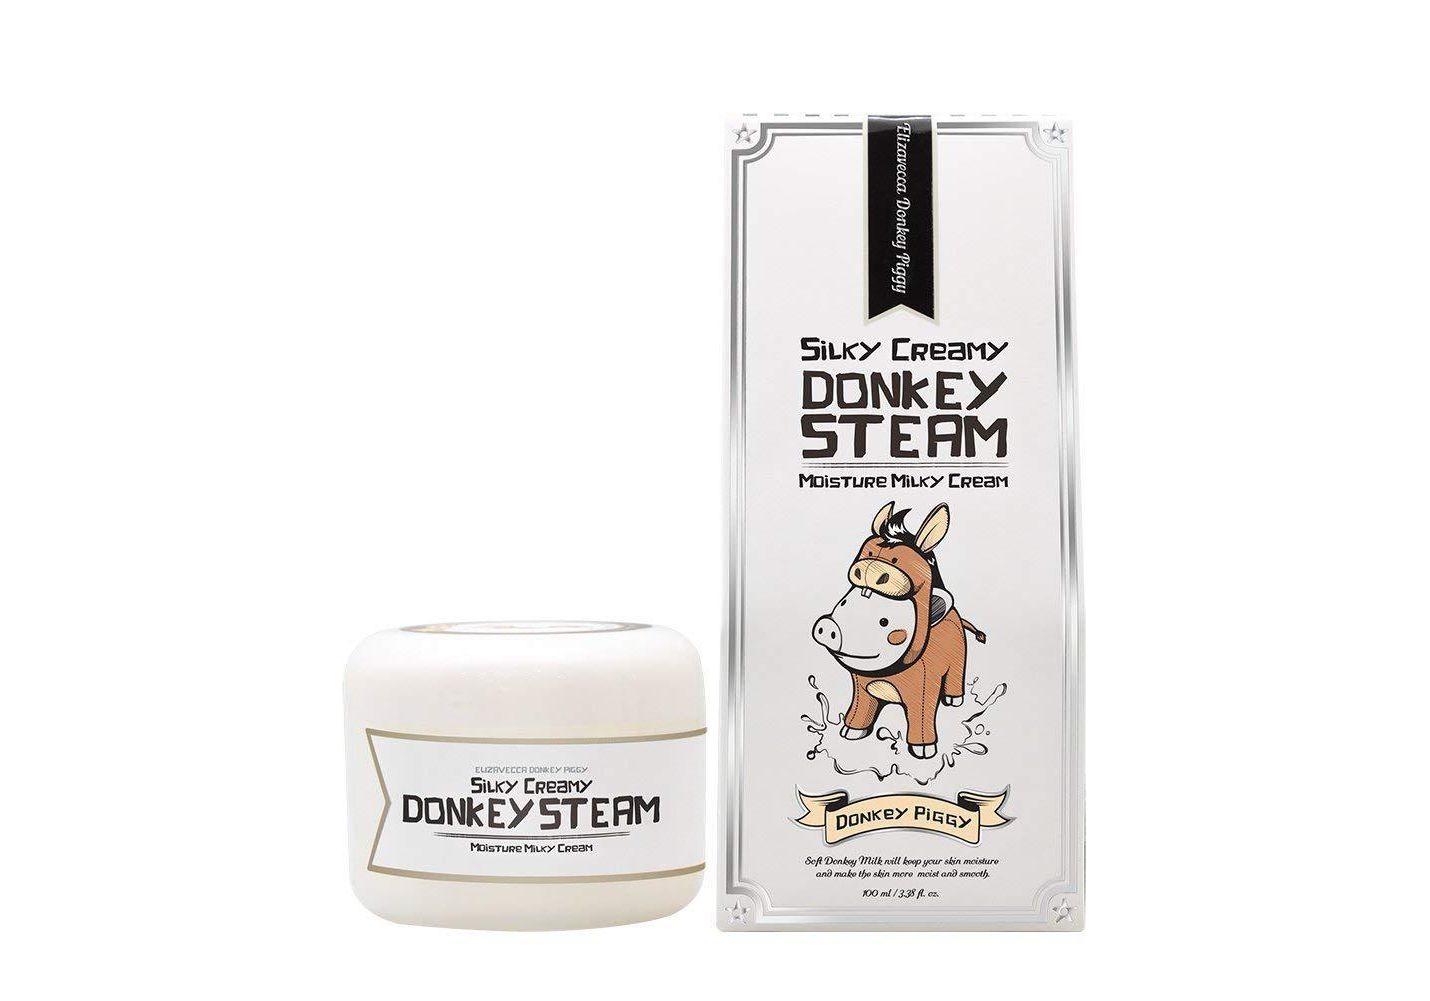 Silky Creamy Donkey Steam Moisture Milky Cream - Увлажняющий